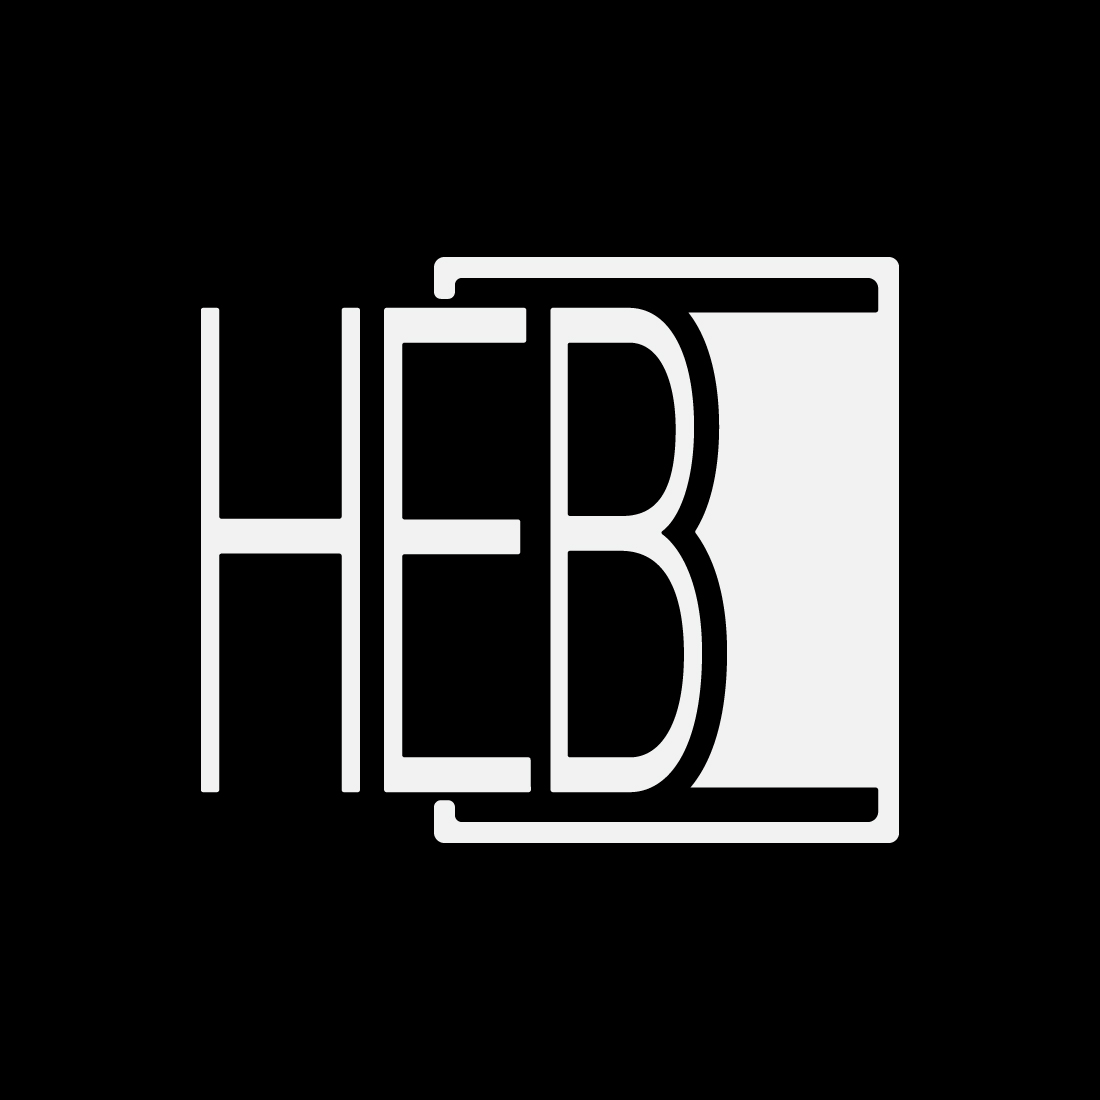 Initials HBE letters logo design Professional Simple , monogram, door, vector template icon BEH logo design preview image.